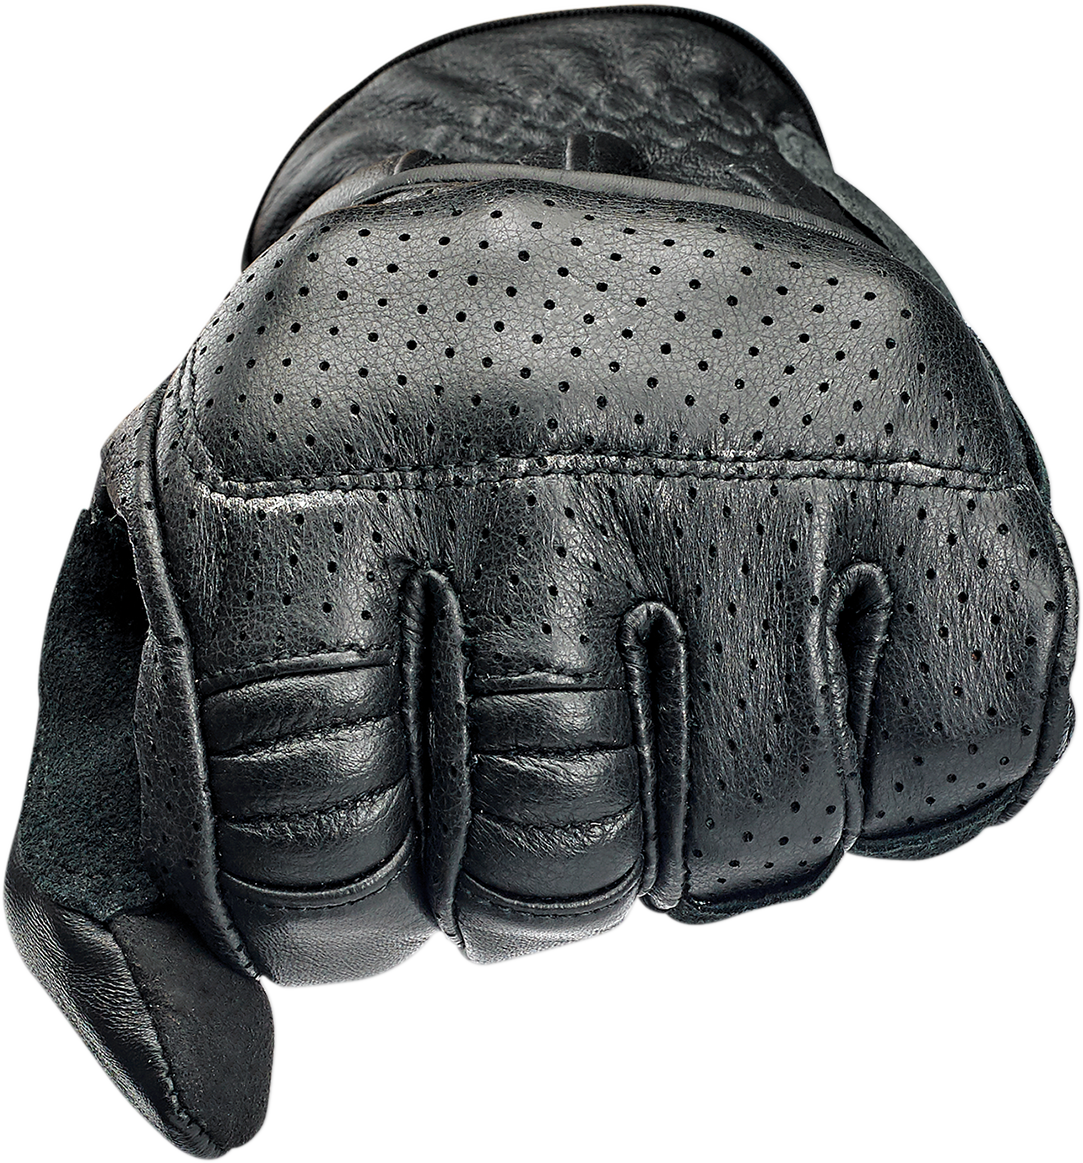 BILTWELL Borrego Gloves - Black